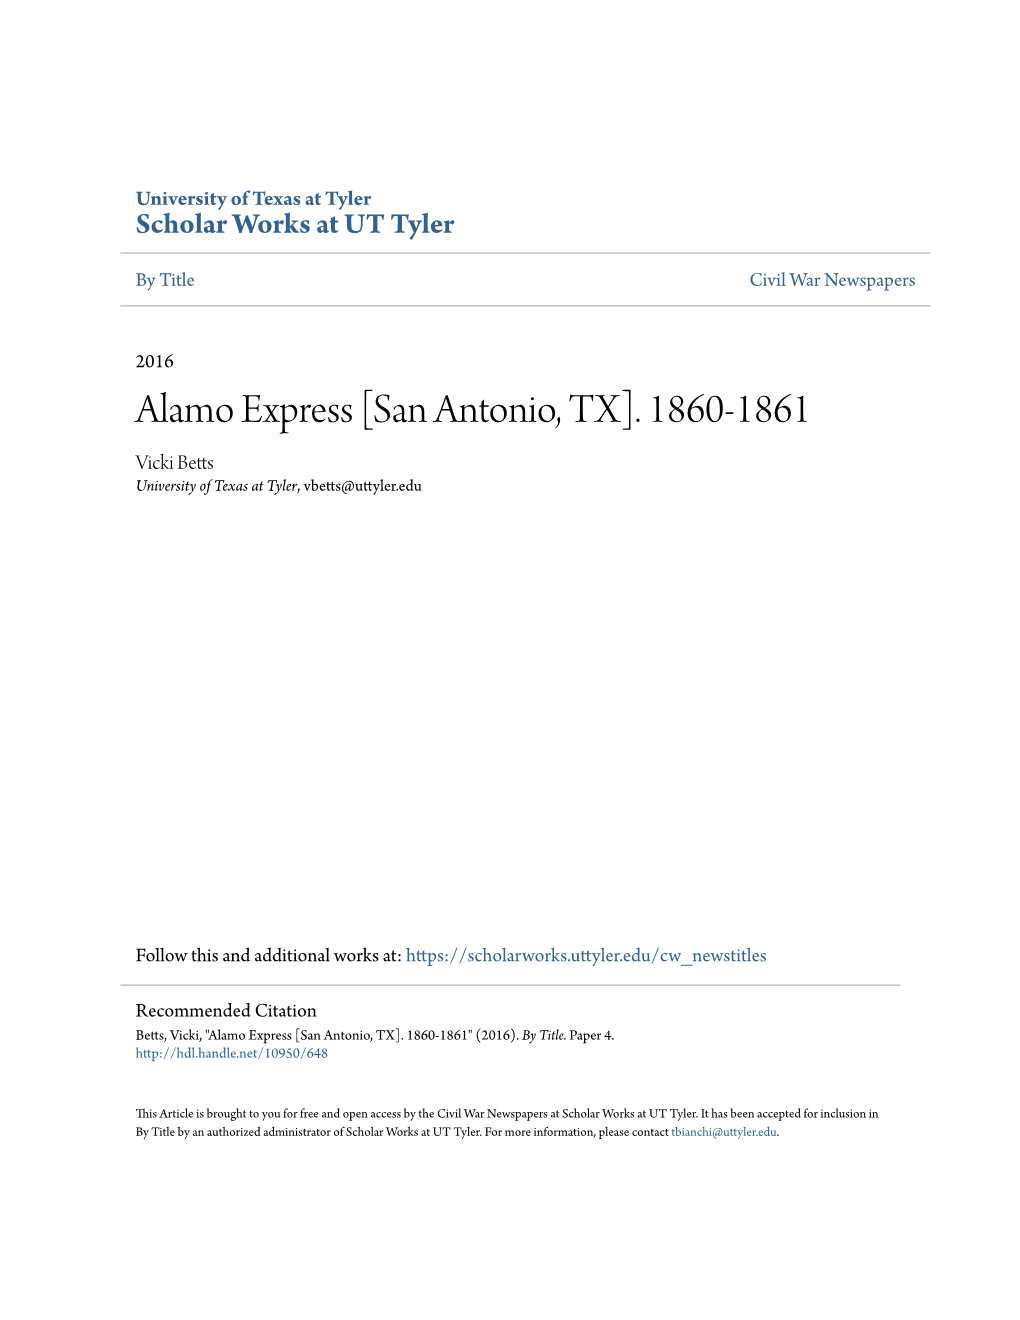 Alamo Express [San Antonio, TX]. 1860-1861 Vicki Betts University of Texas at Tyler, Vbetts@Uttyler.Edu